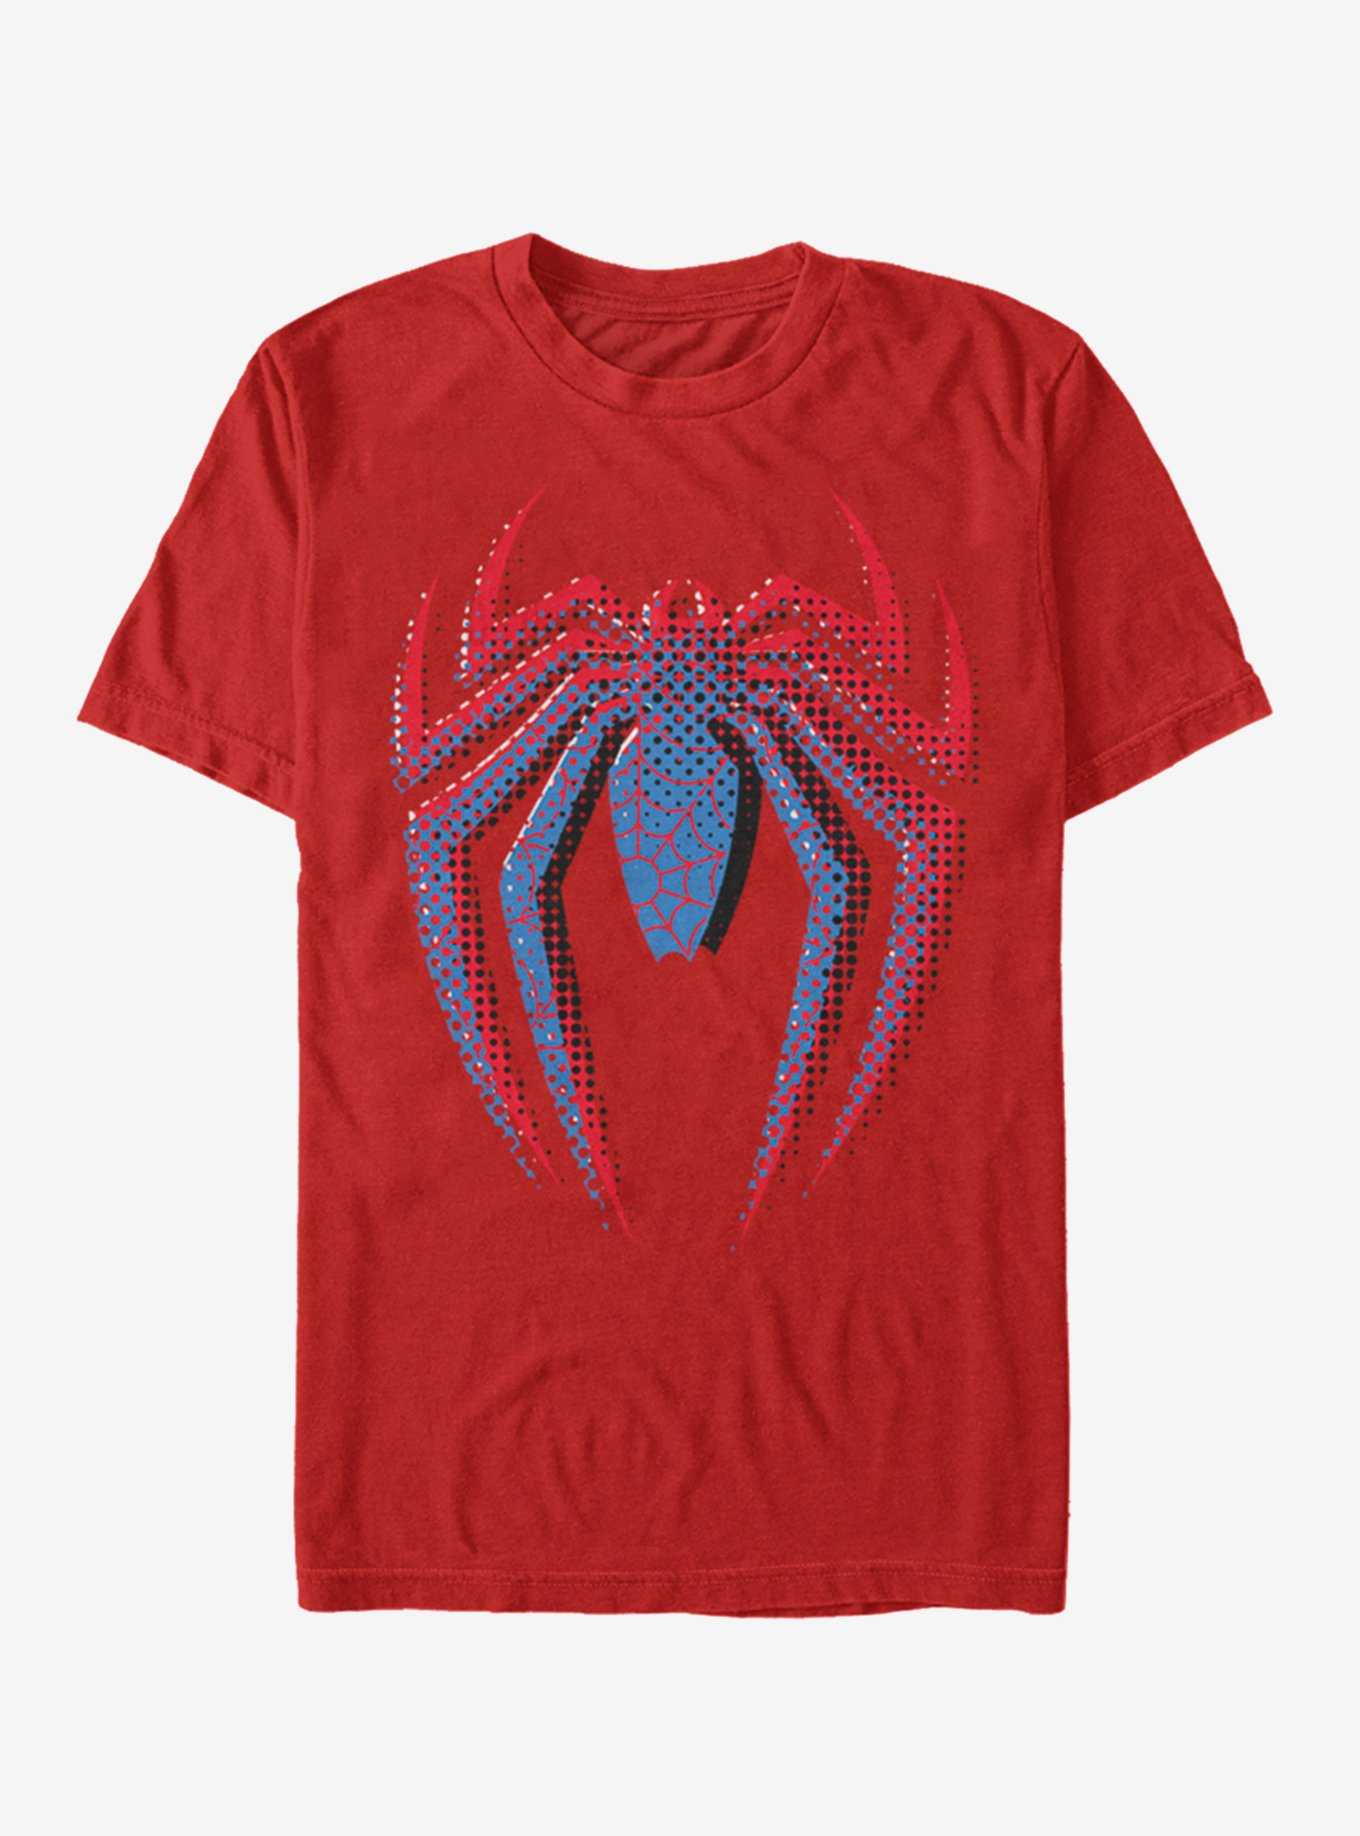 Marvel Spider-Man Layered Spider-Man Logo T-Shirt, , hi-res